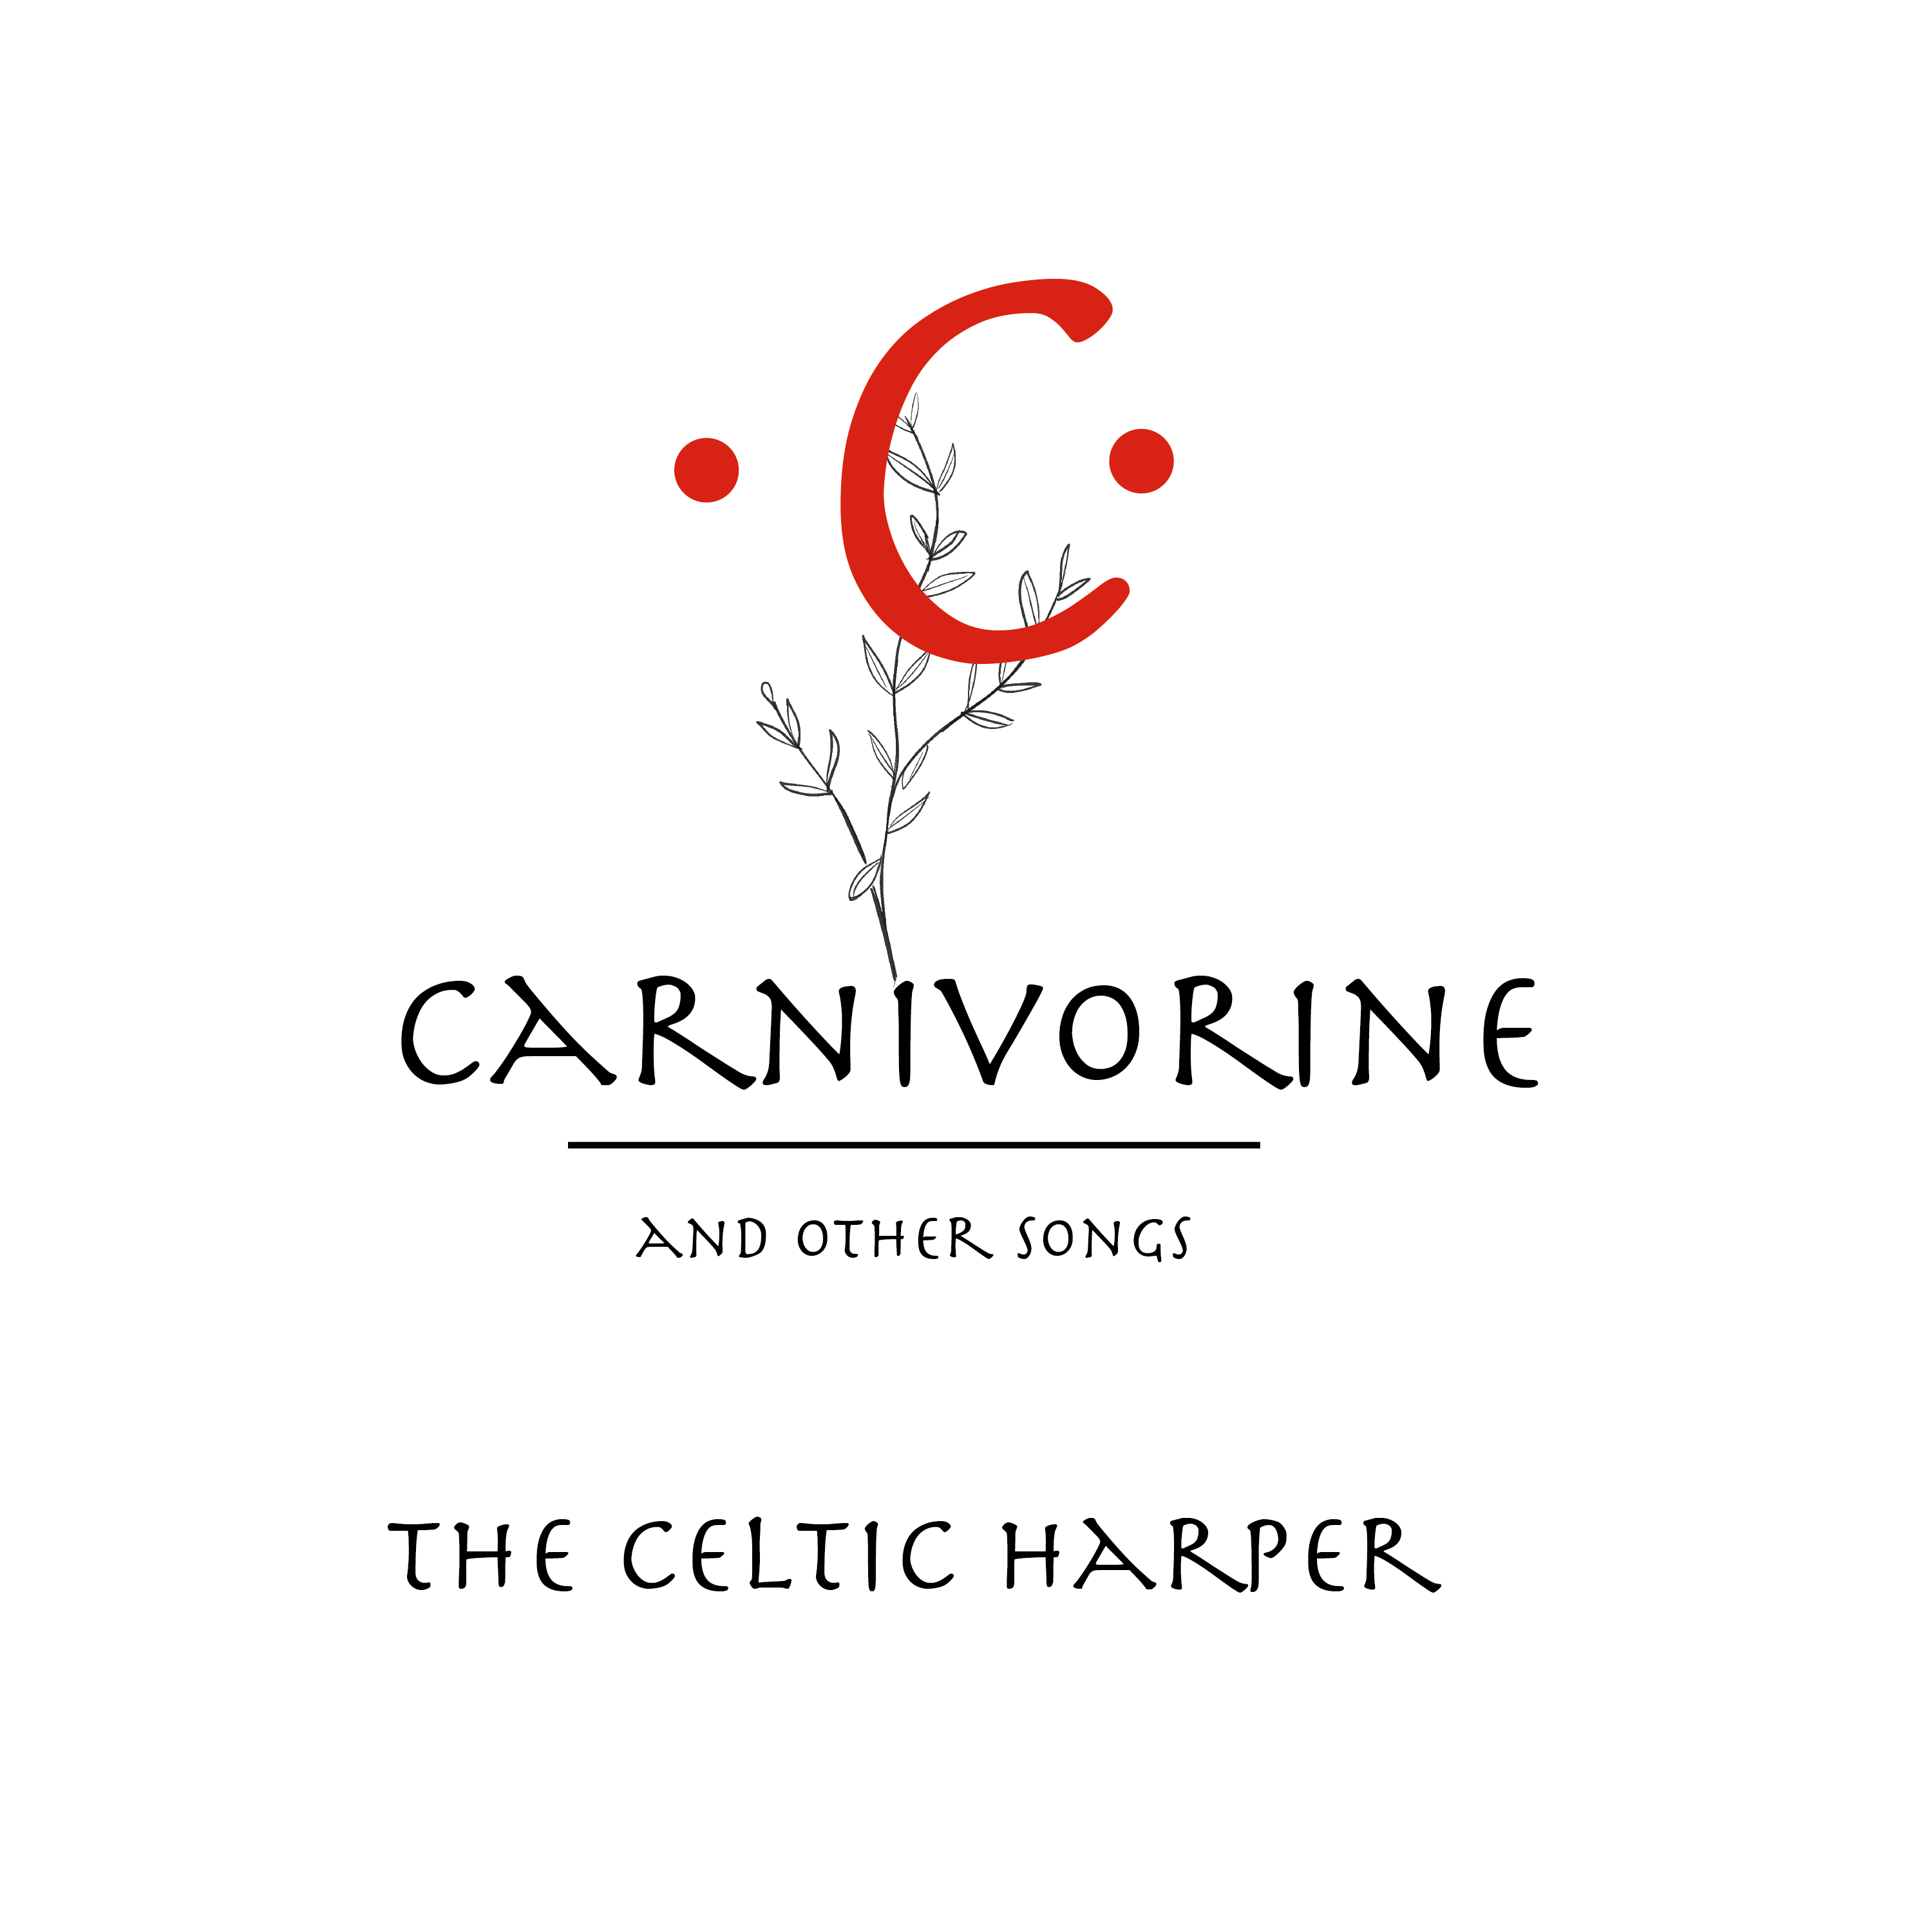 The Celtic Harper’s Debut Album “Carnivorine”: A Musical Odyssey through Myth and Emotion